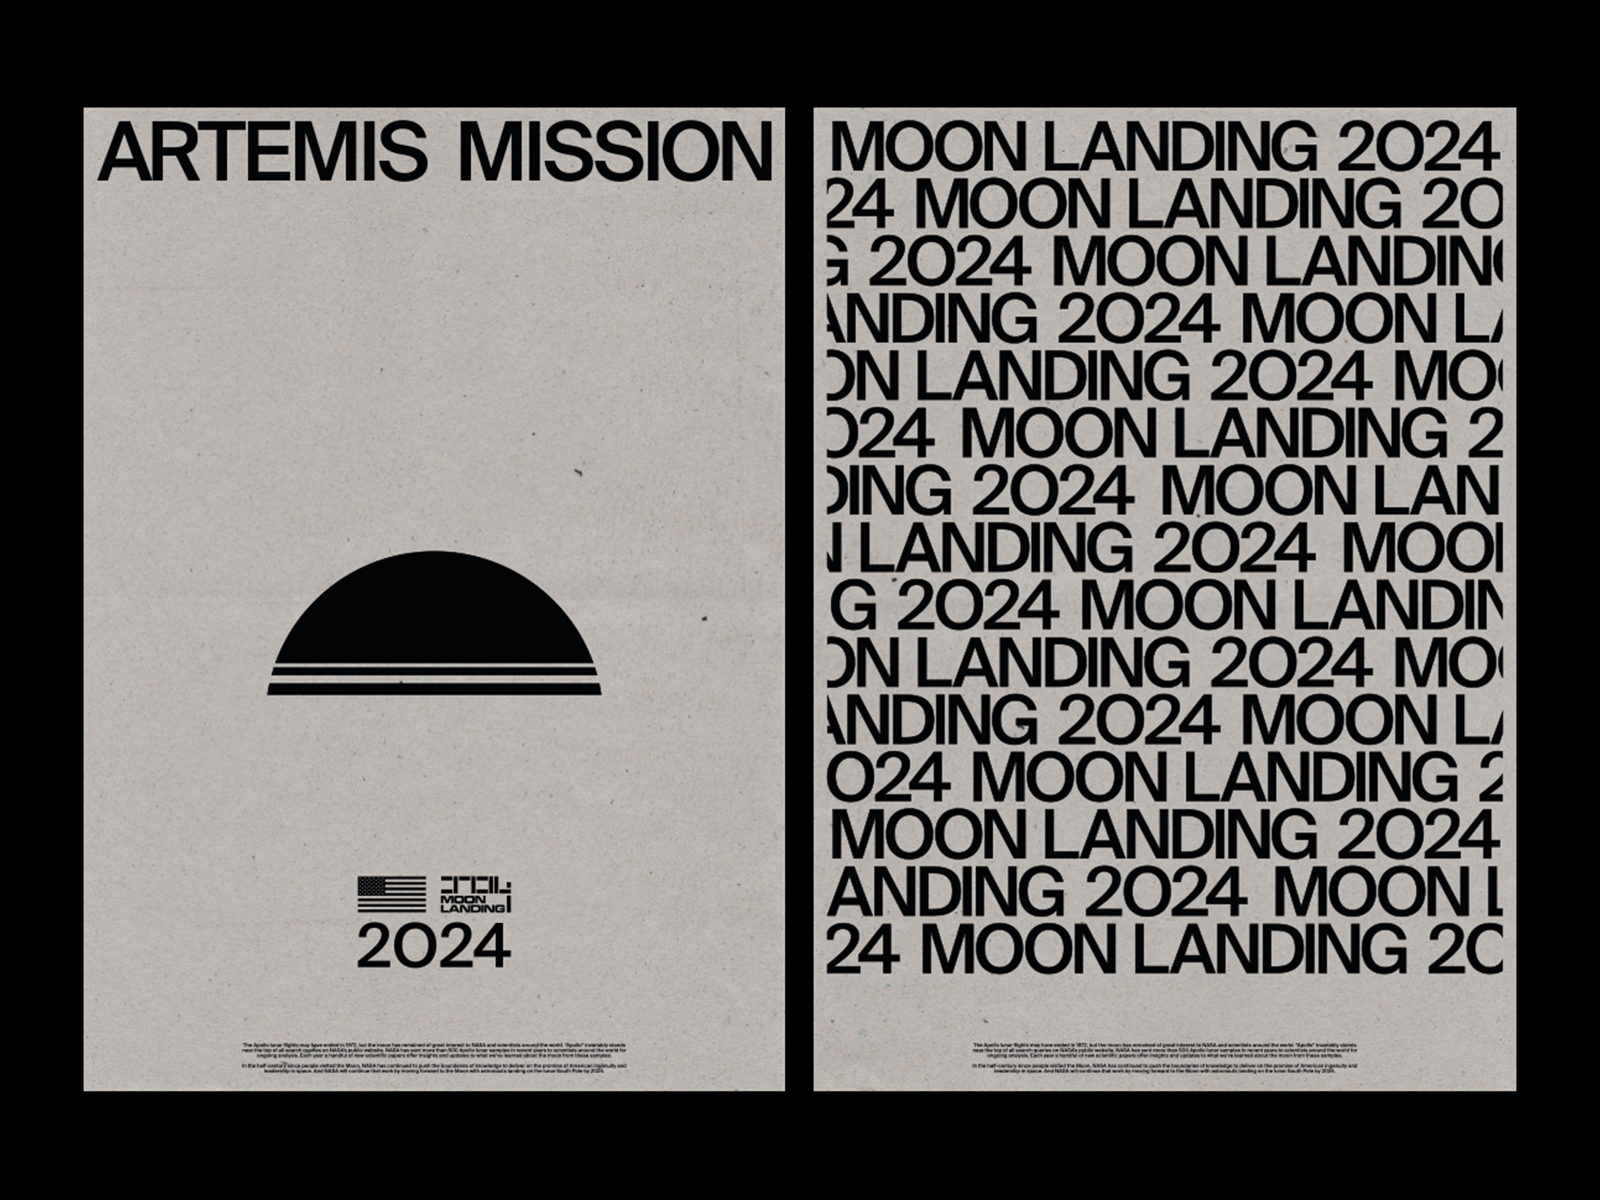 Moon Landing 2024 Posters by Art Belikov on Dribbble